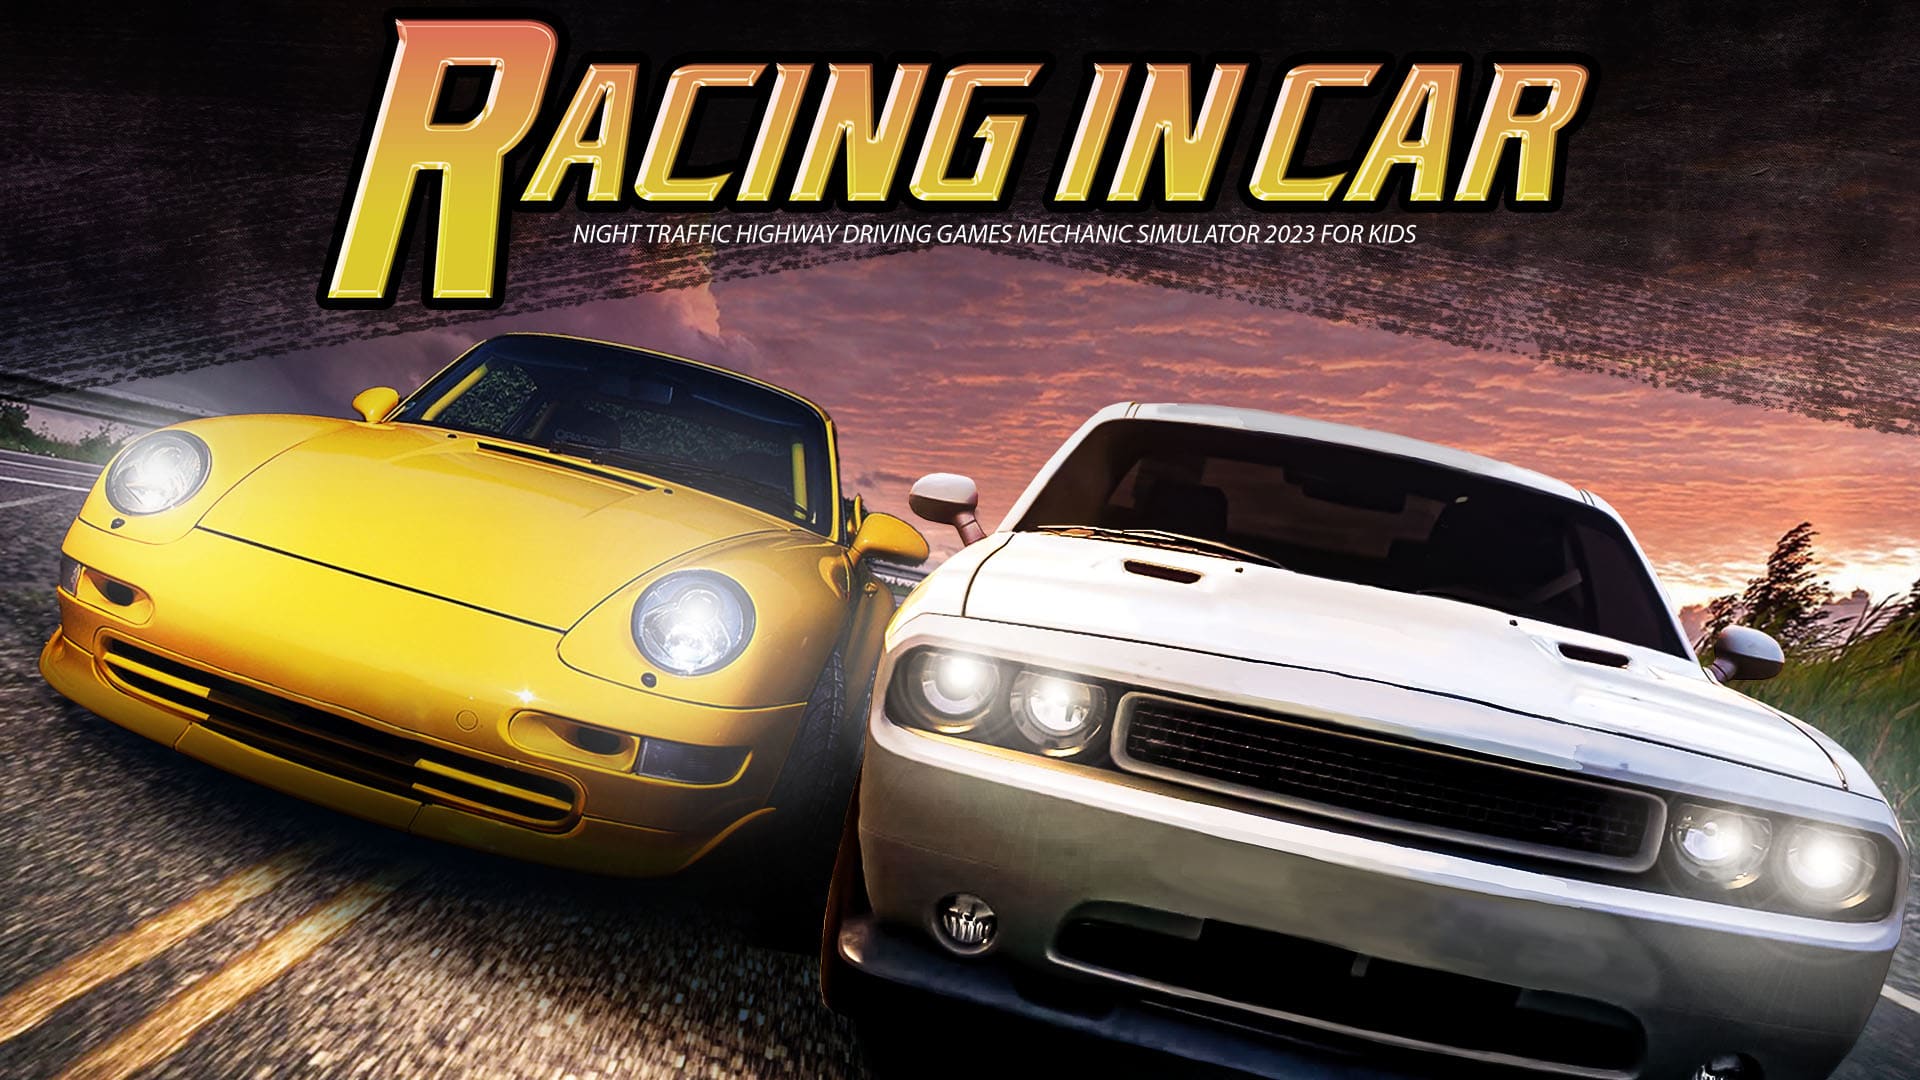 Racing in Car - Night Traffic Highway Driving Games Mechanic Simulator 2023 for Kids 1